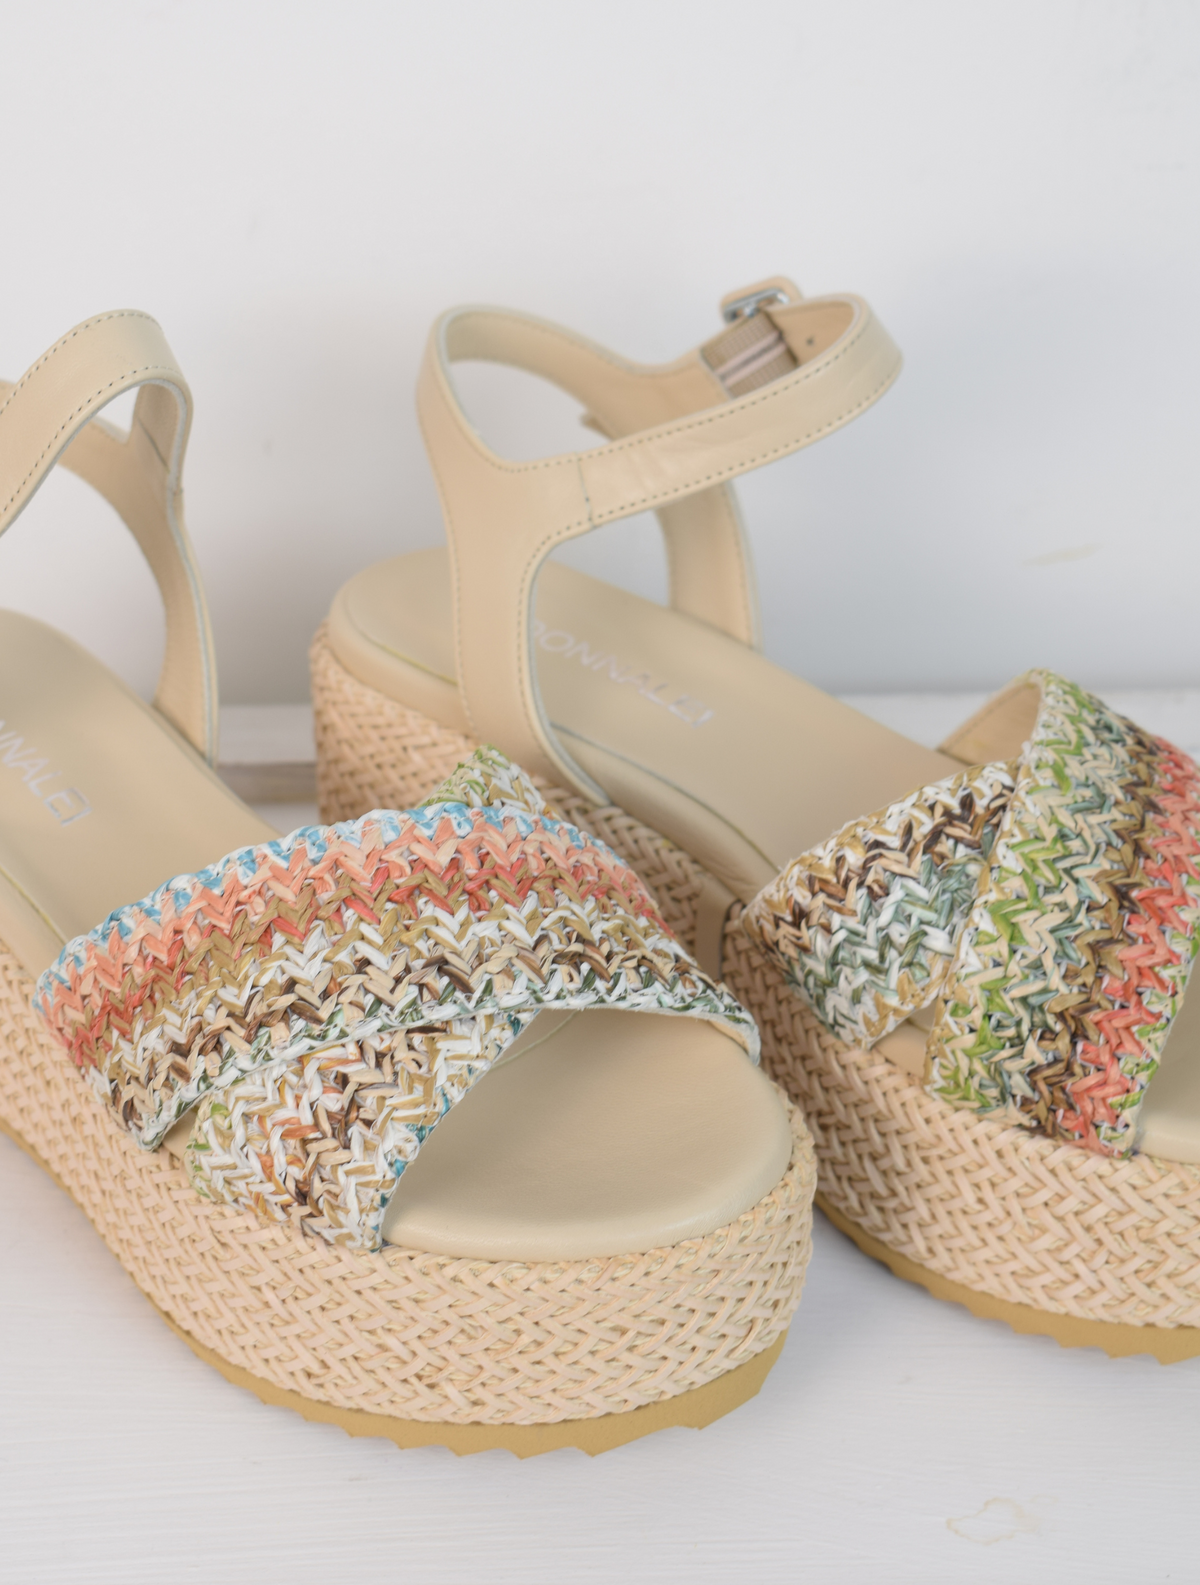 Blush raffia platform sandal with cross foot strap from pastel coloured raffia